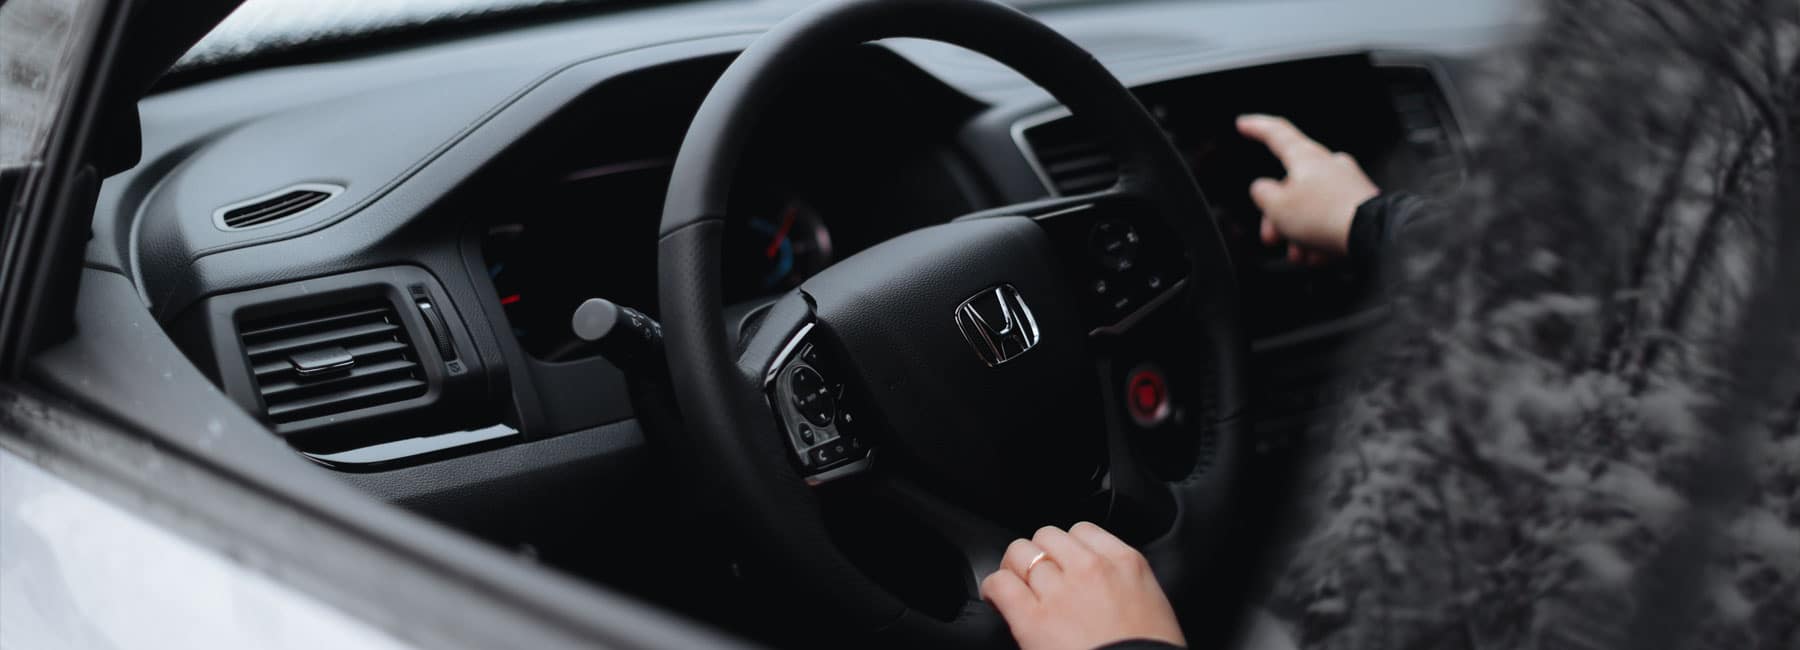 woman adjusts her radio in Honda car